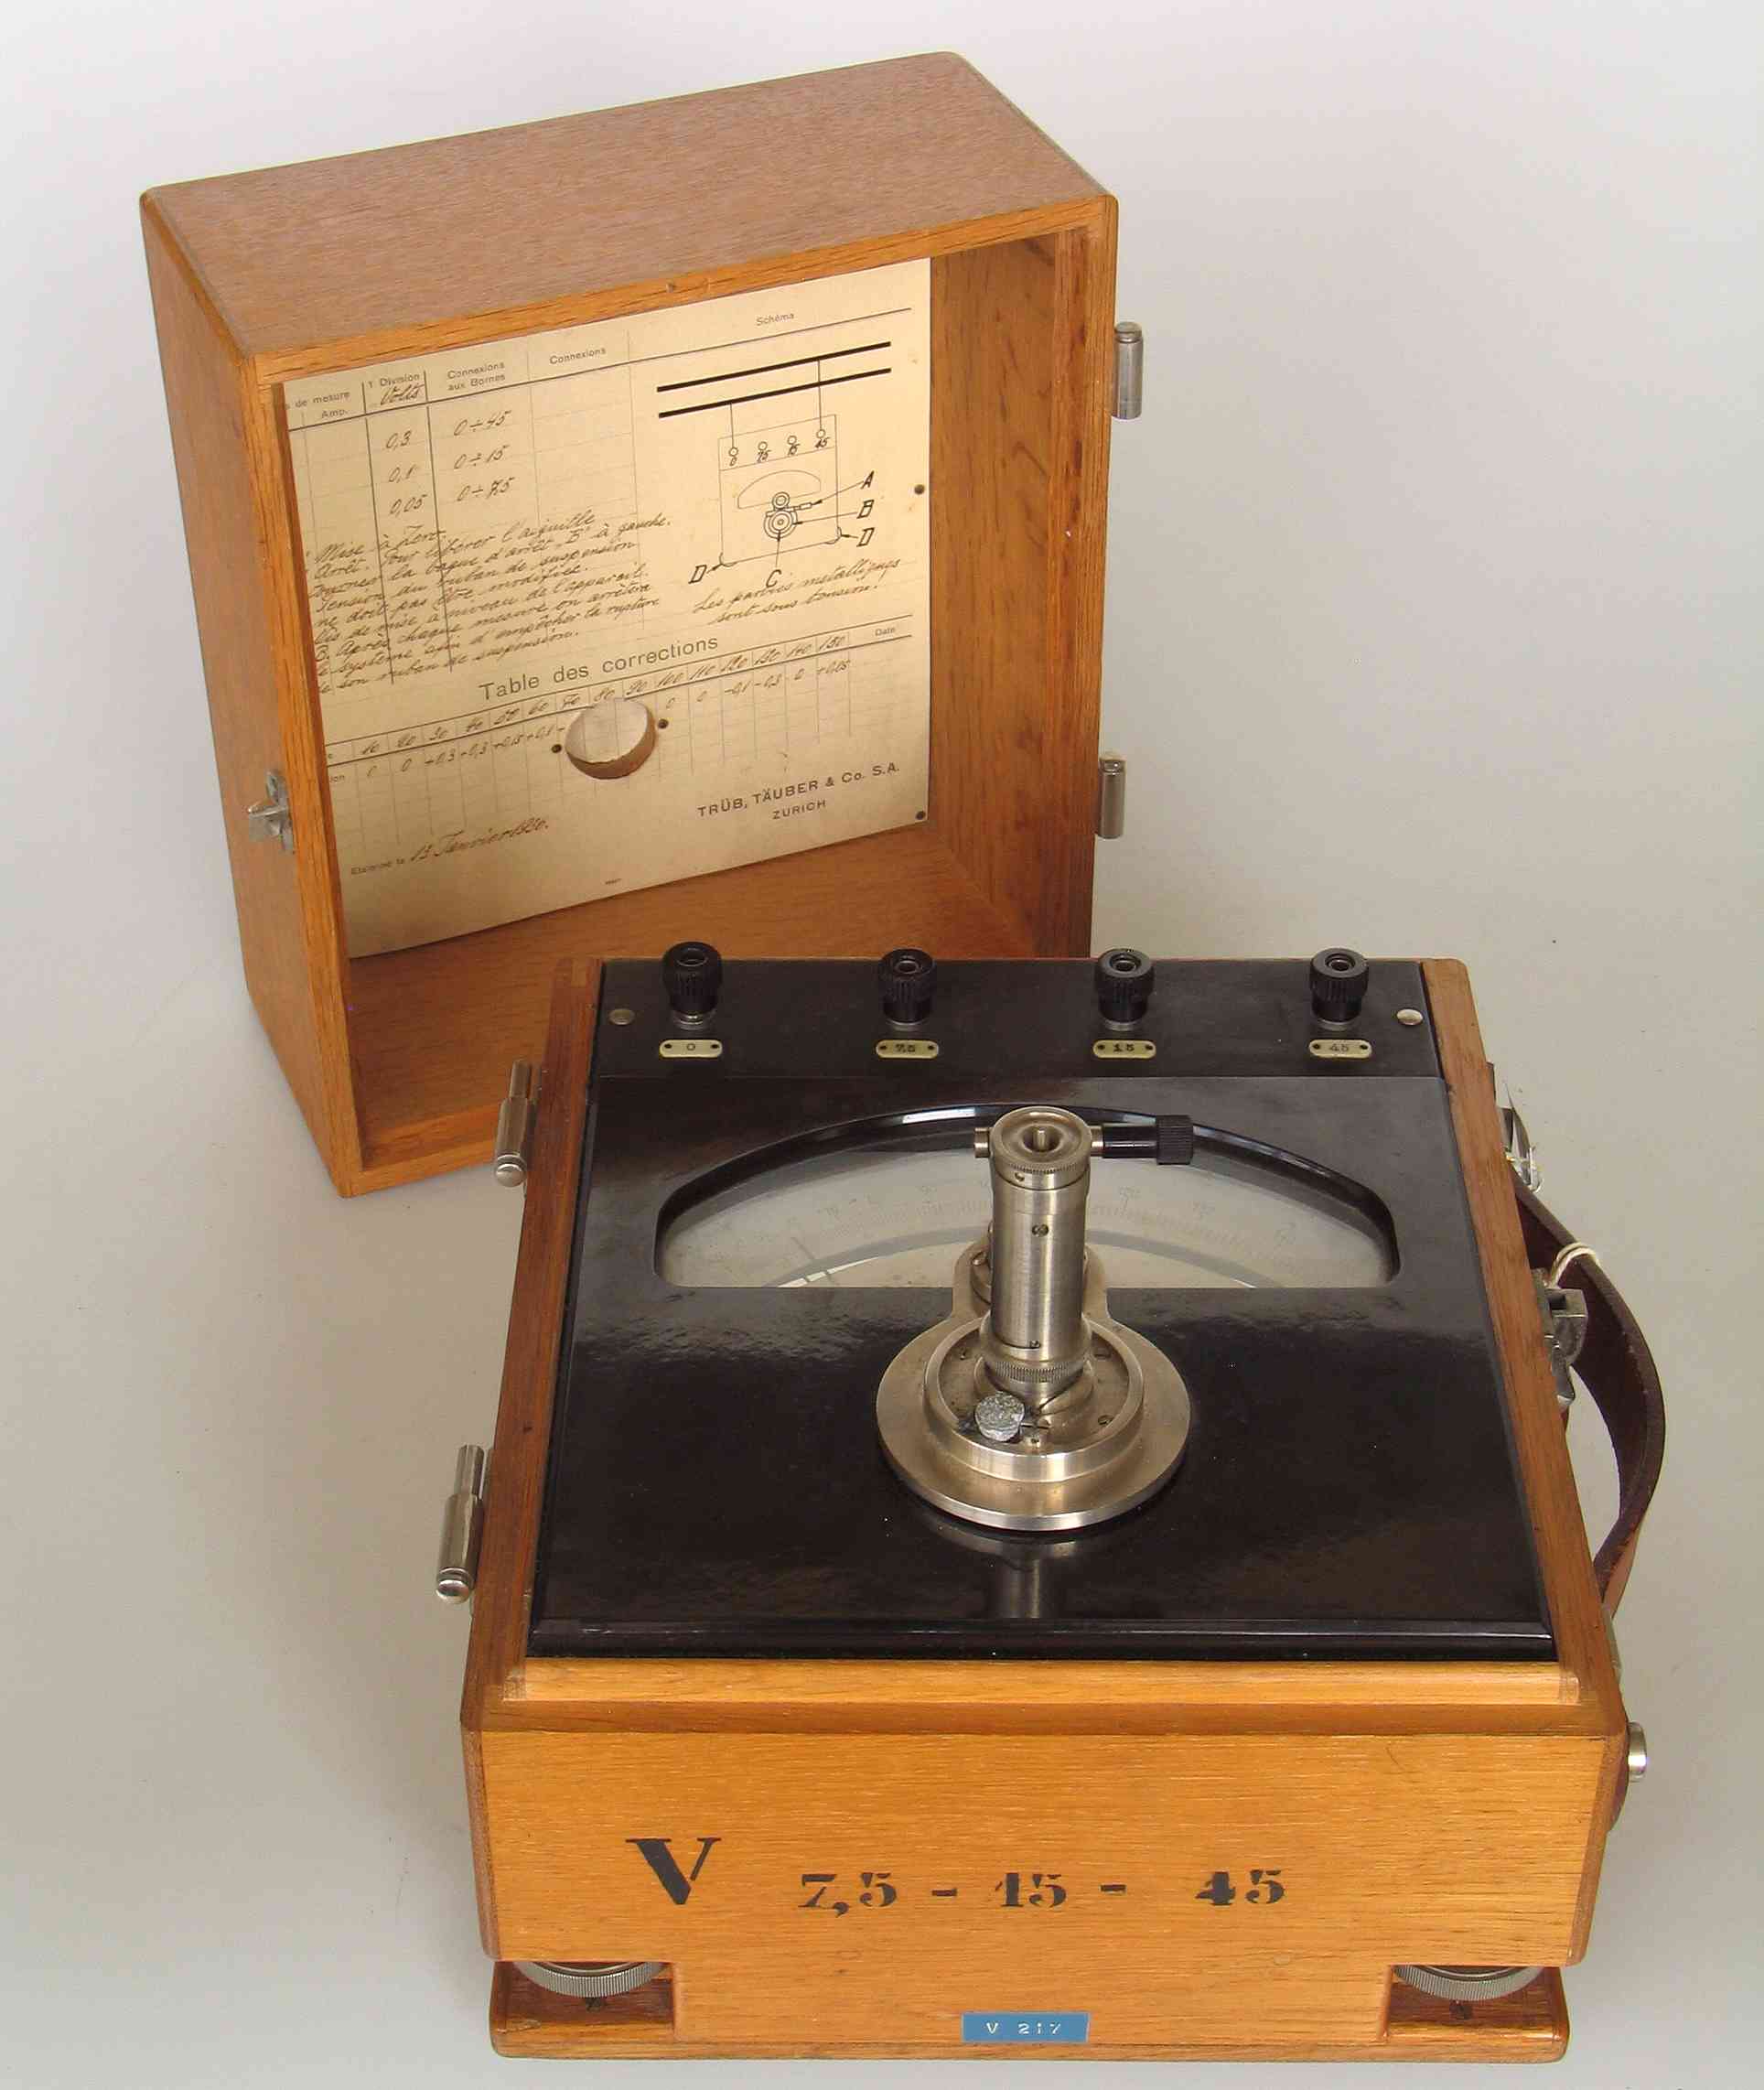 Voltmètre dynamométrique portatif
(7,5 V - 15 V - 45 V)